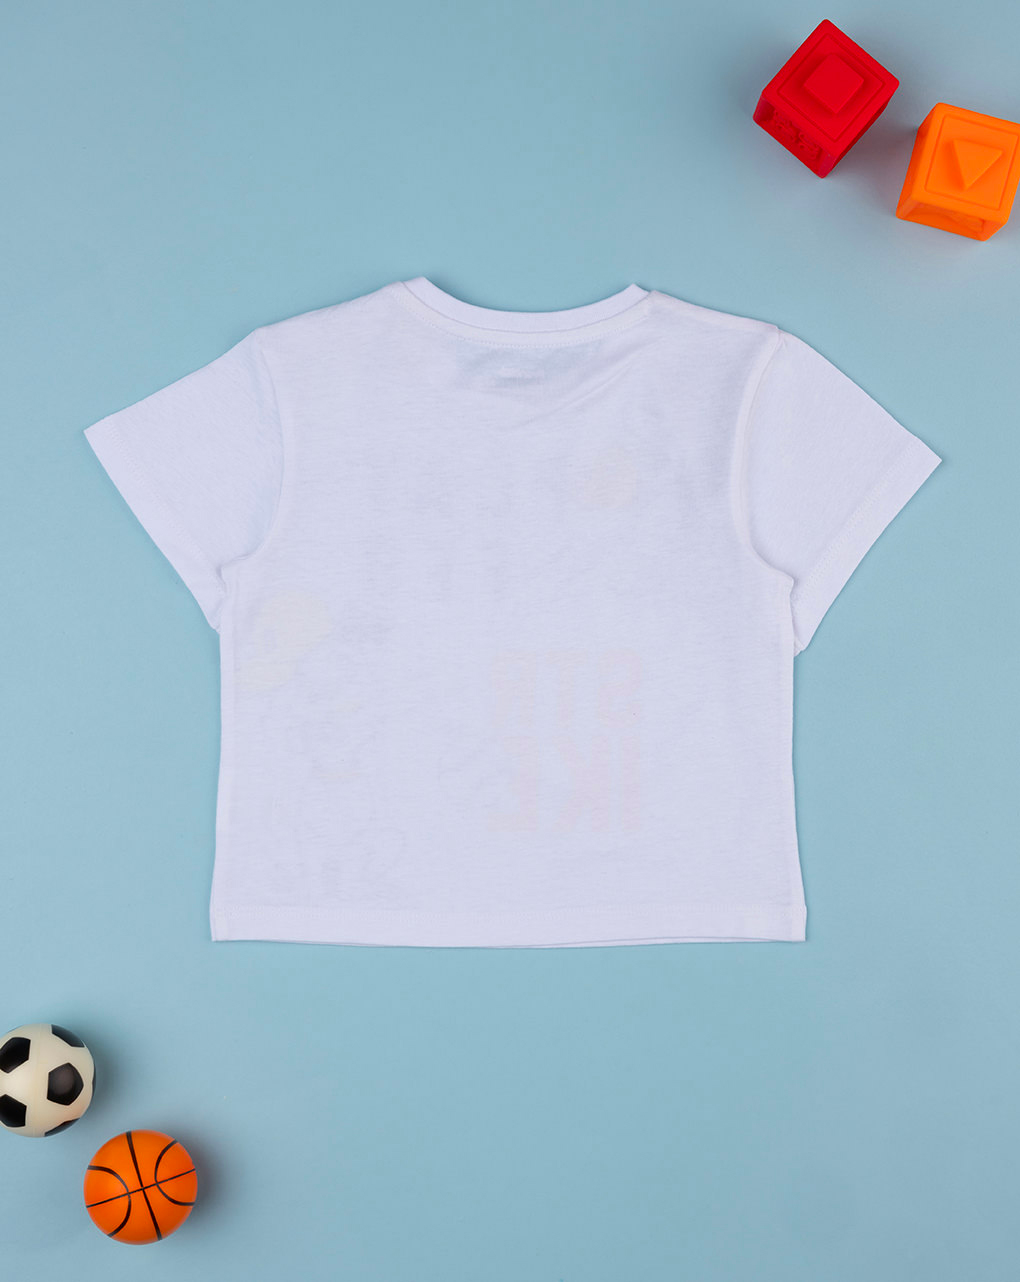 Camiseta infantil blanca estampada - Prénatal